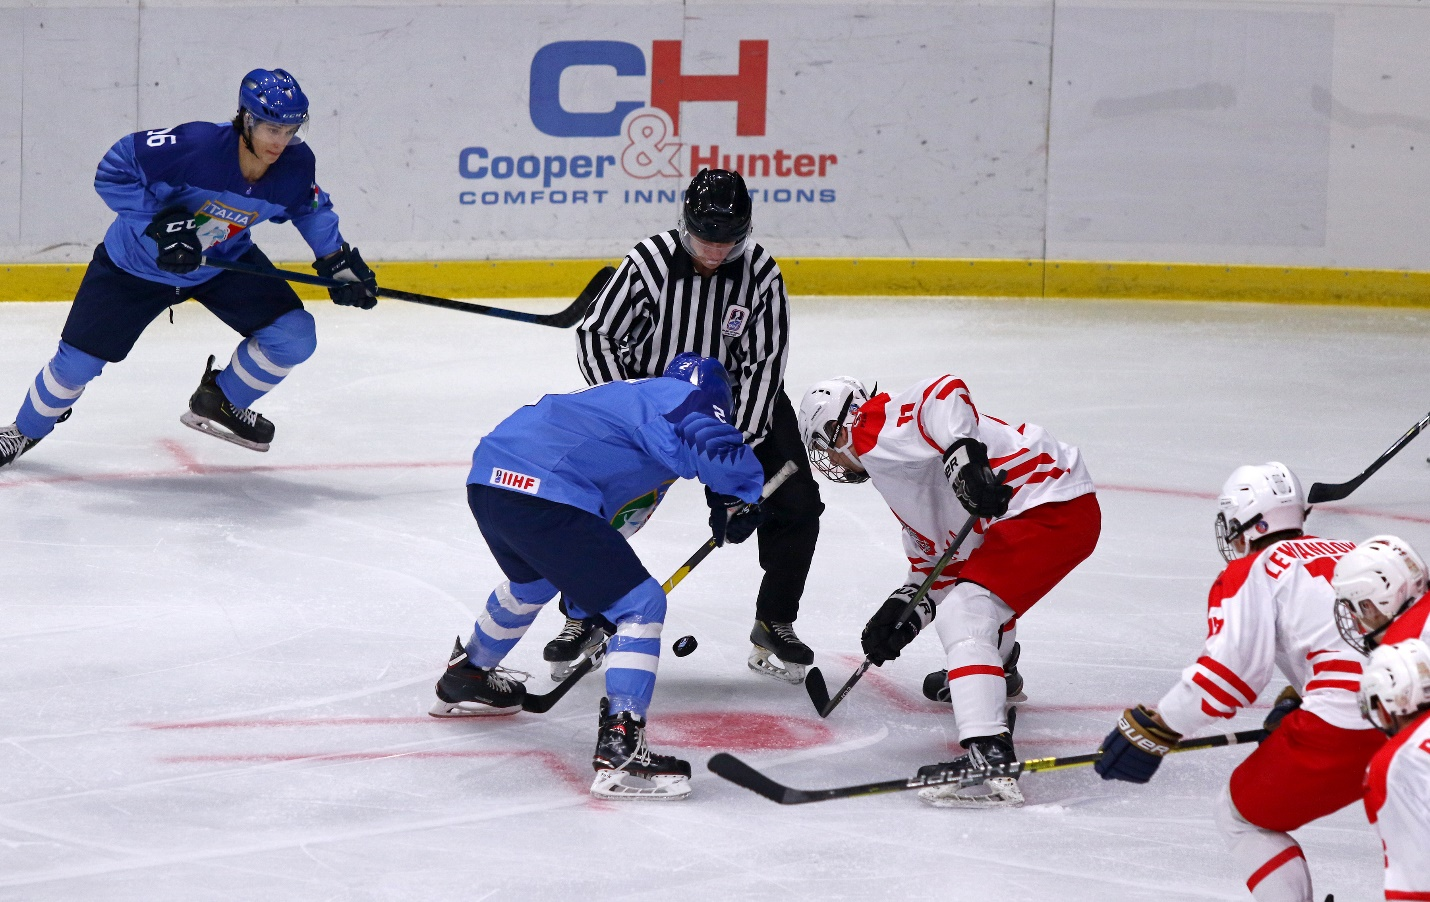 An ice hockey match in progress